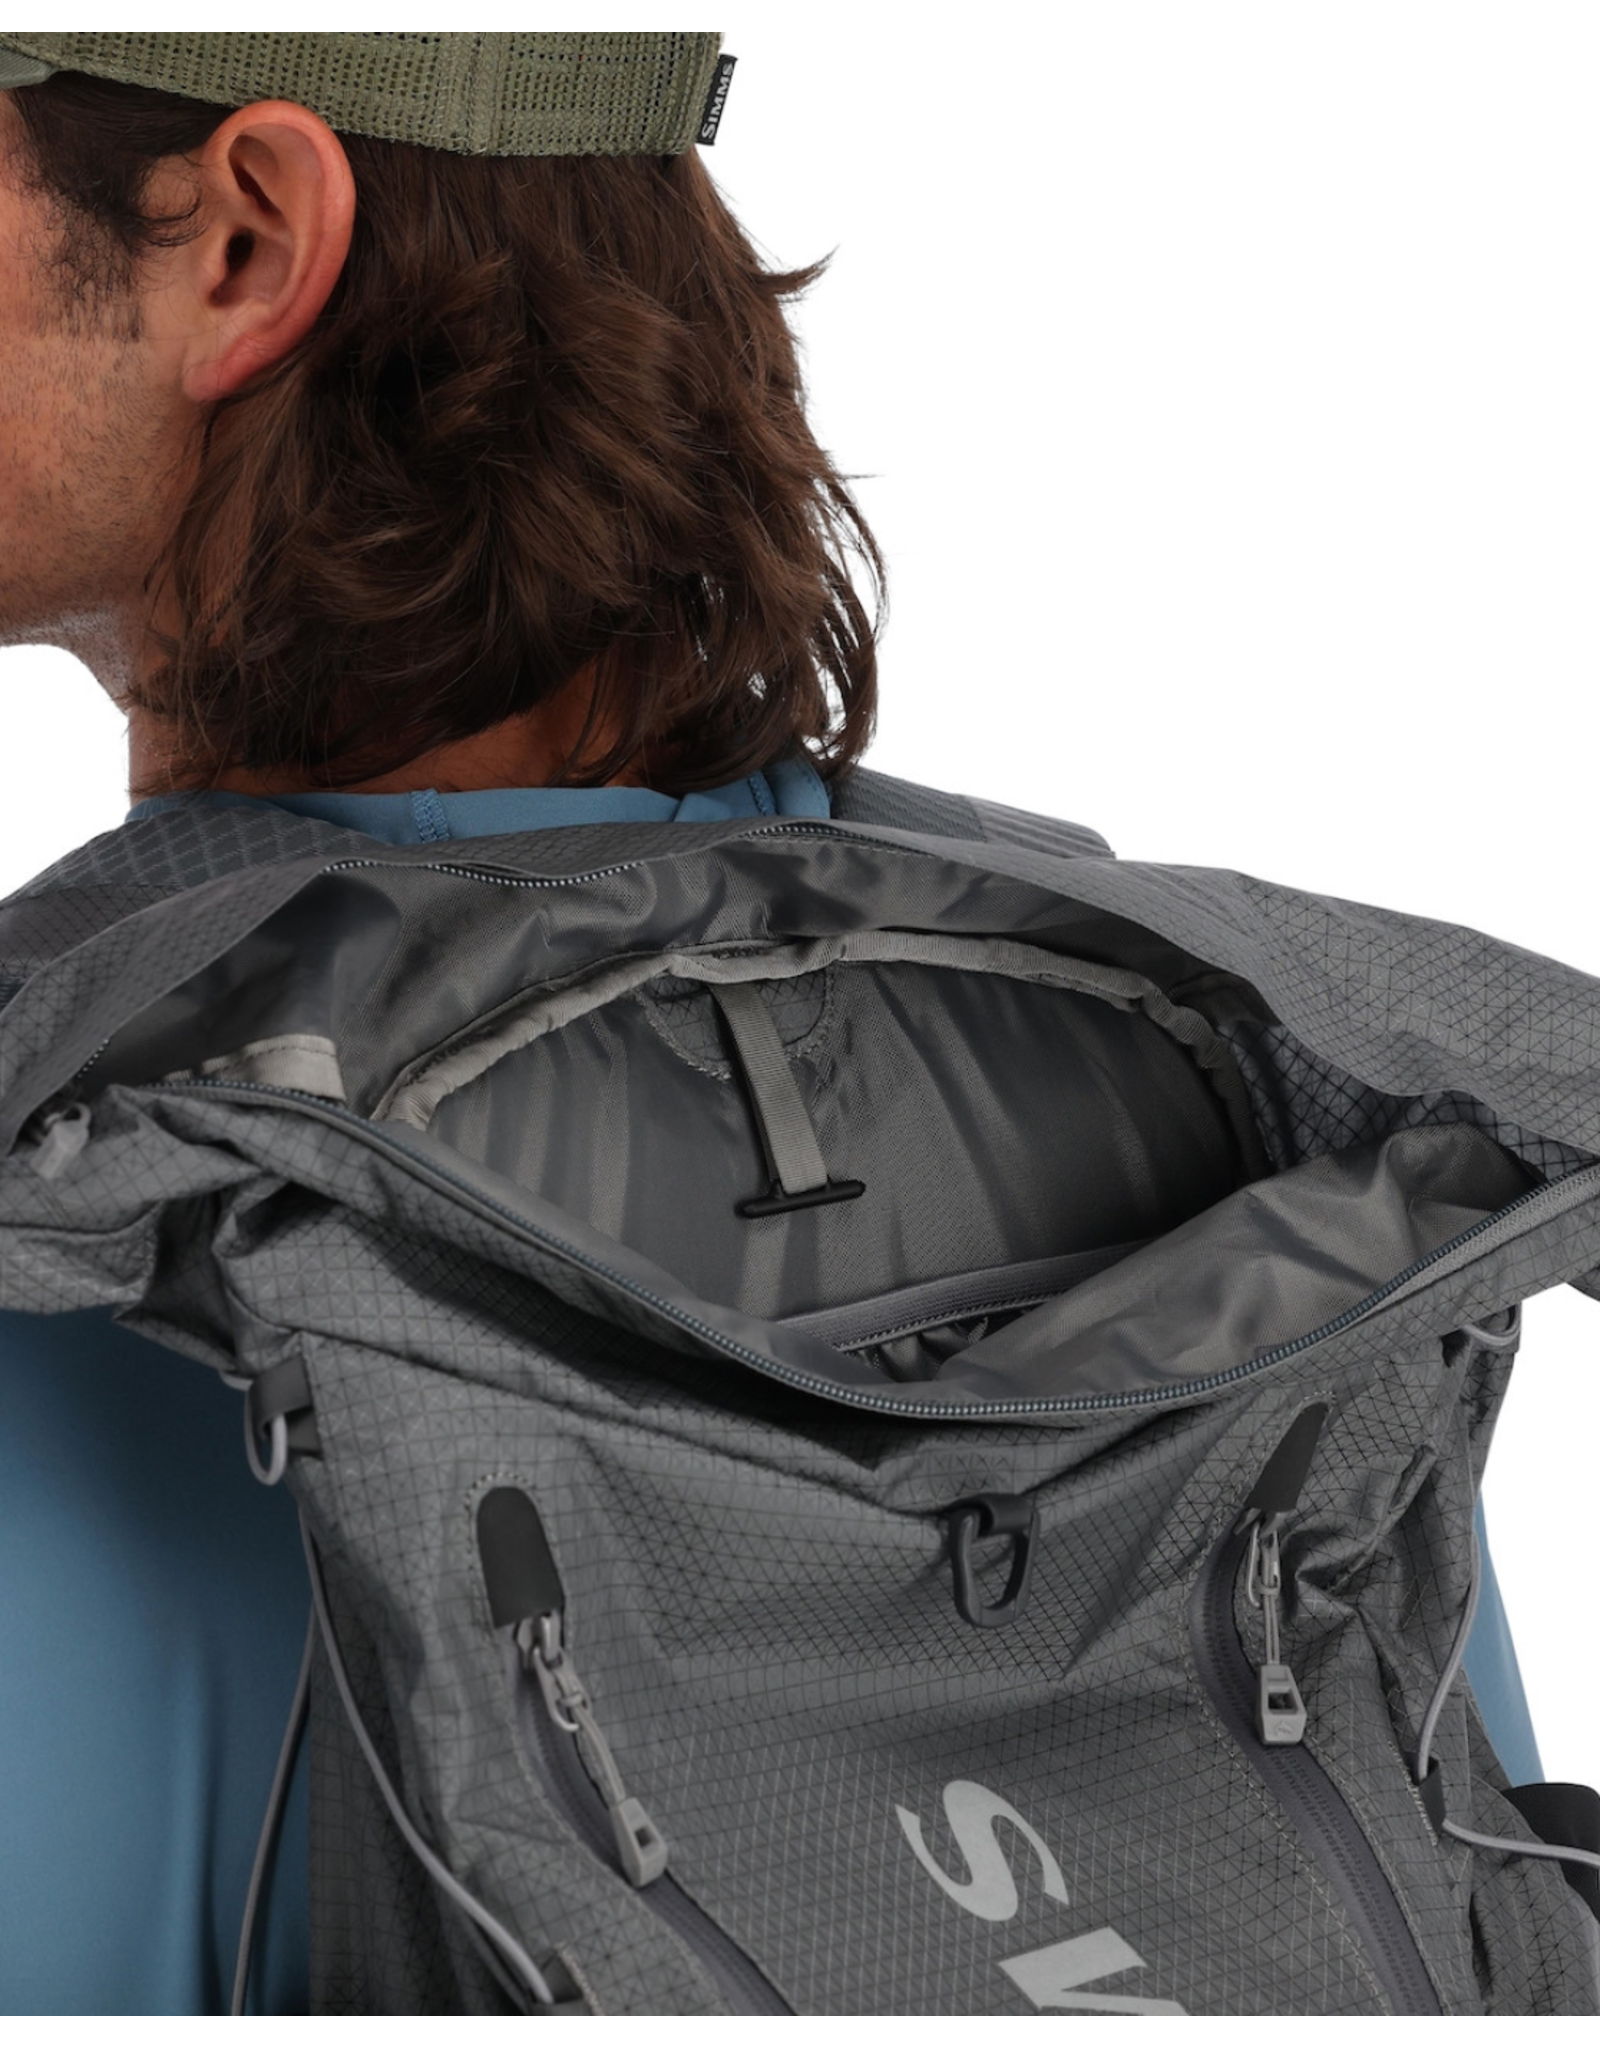 Simms Simms - Flyweight Backpack